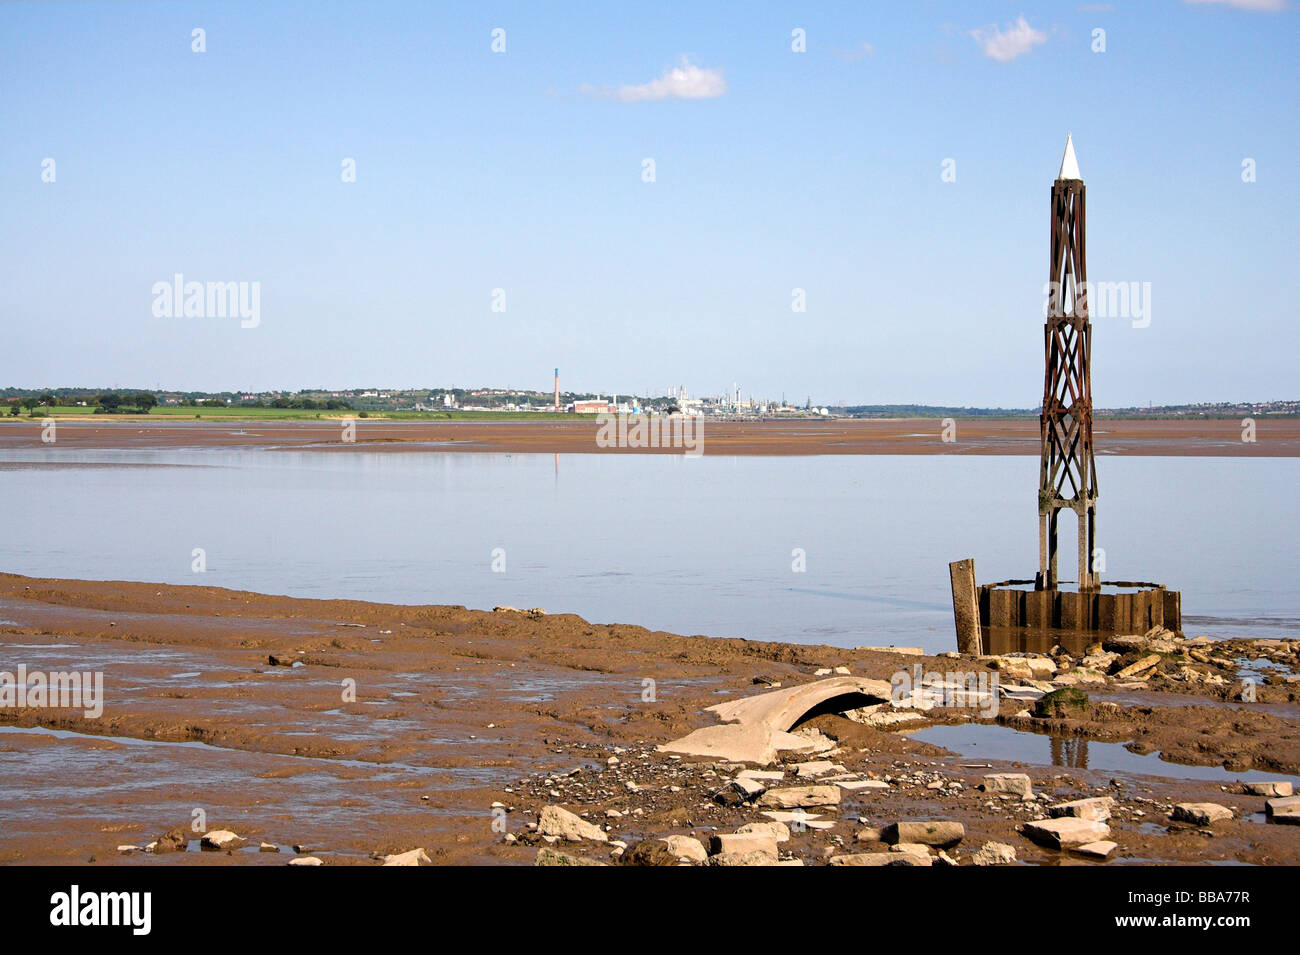 View across the River Mersey Estuary, near Hale, Merseyside, UK Stock Photo